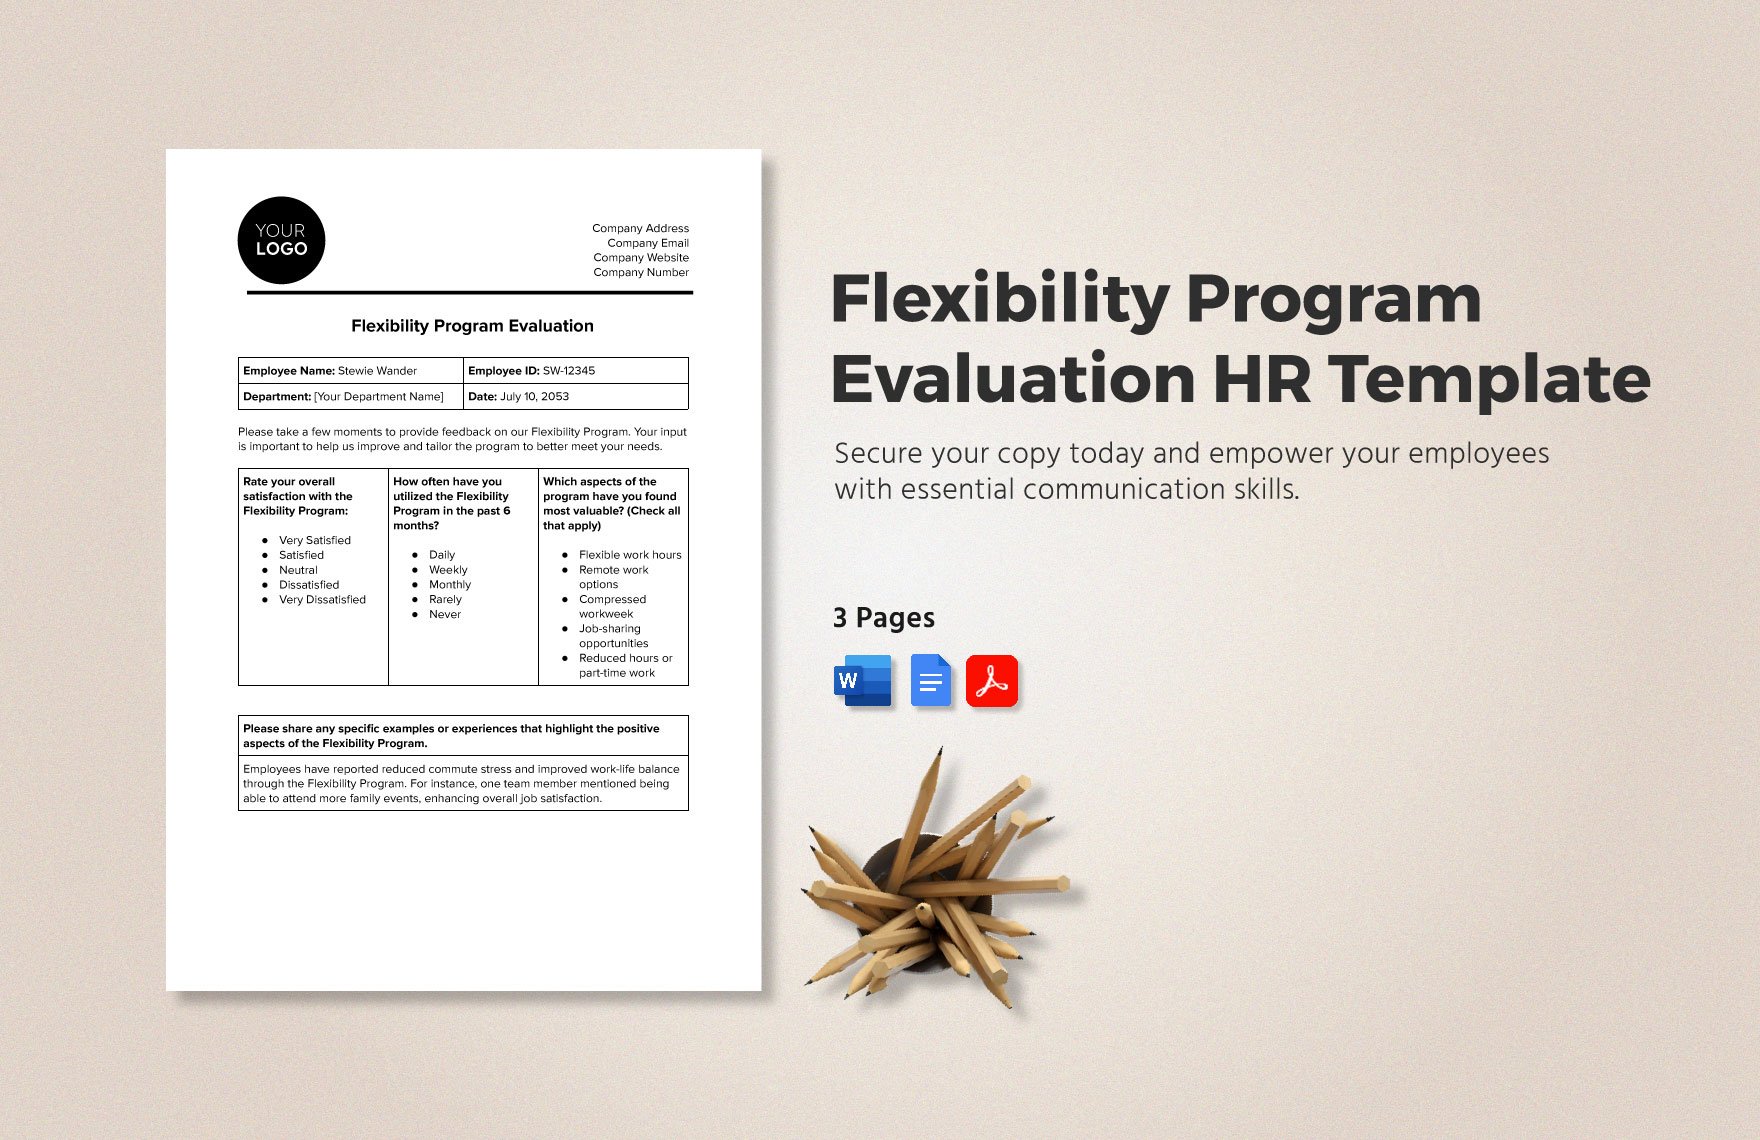 Flexibility Program Evaluation HR Template